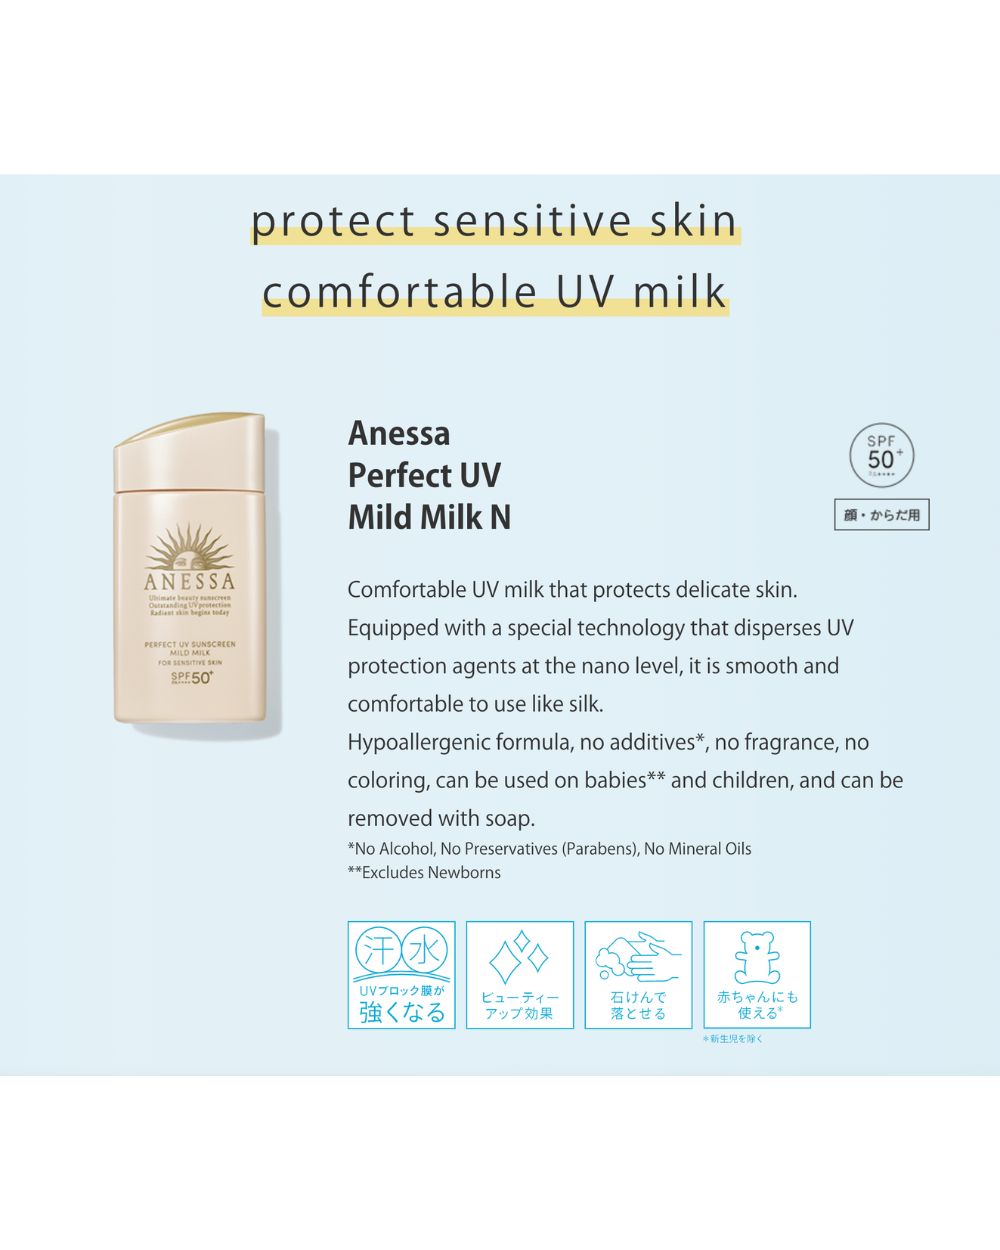 Anessa - Perfect UV-zonnebrandcrème Milde melk SPF50+ PA++++